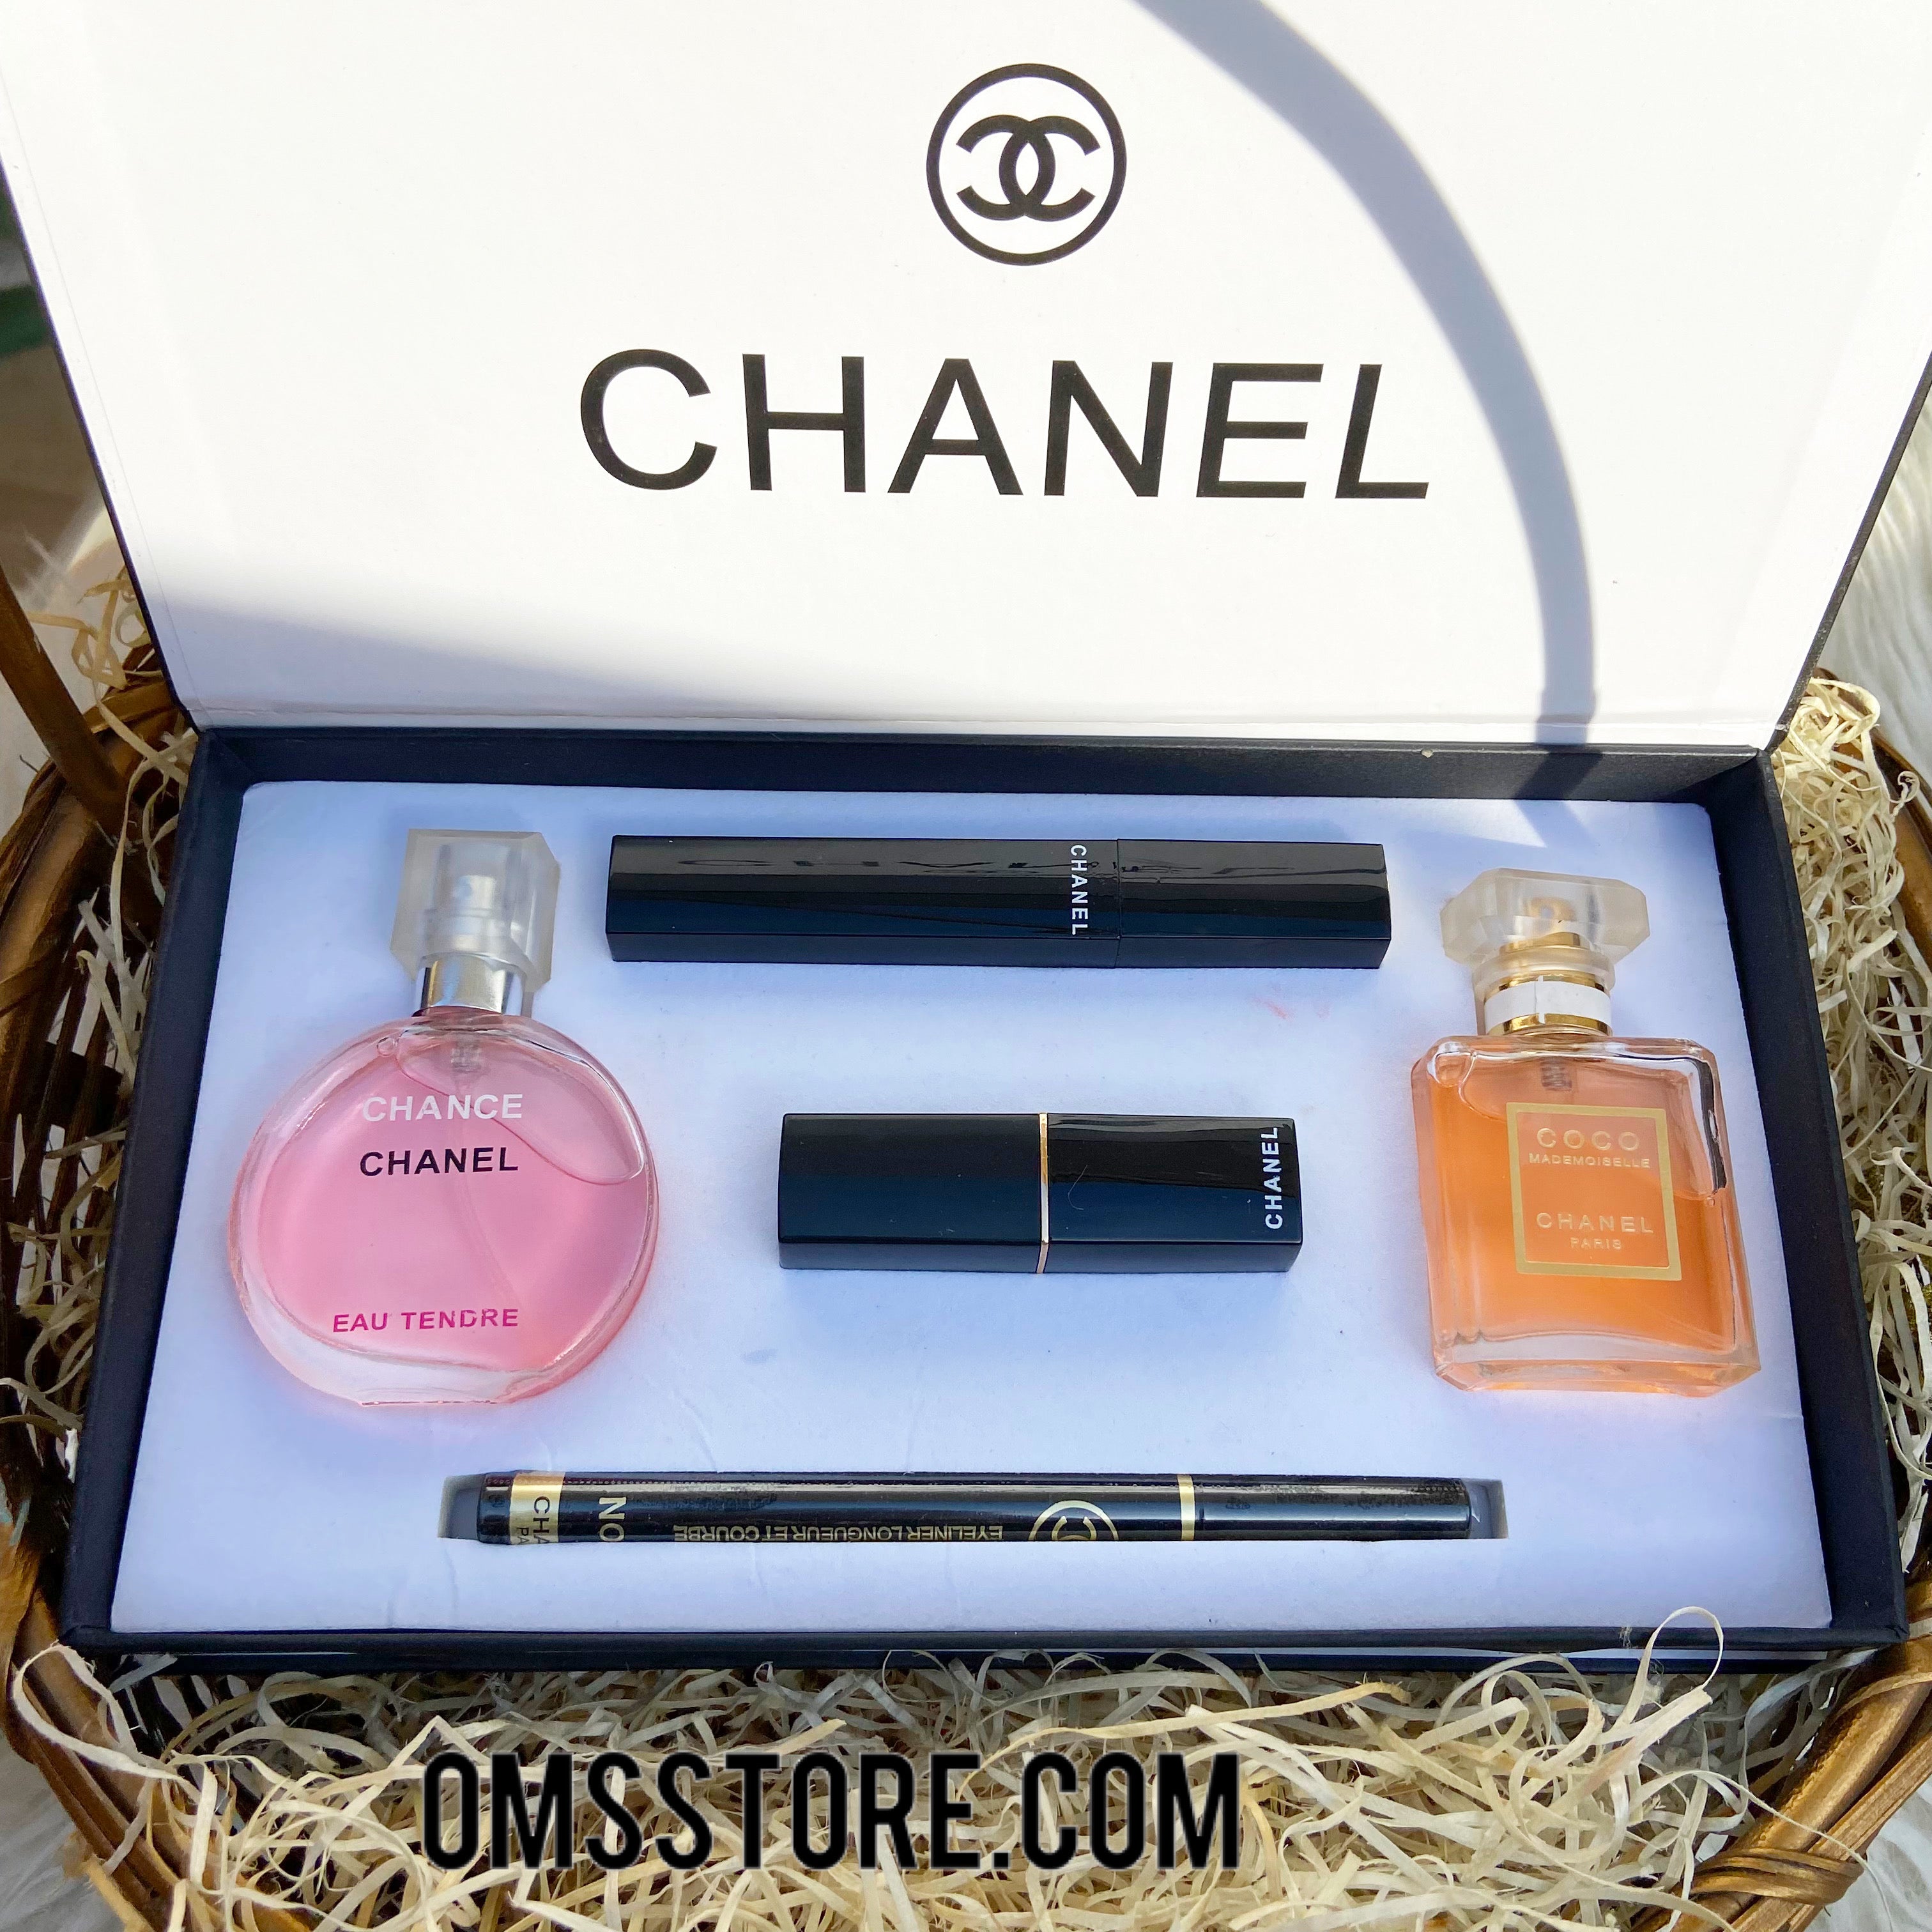 CHANEL Gift SetChanel N5 LEauHydra Beauty Micro CremeSerumLiquid  Essence  eBay